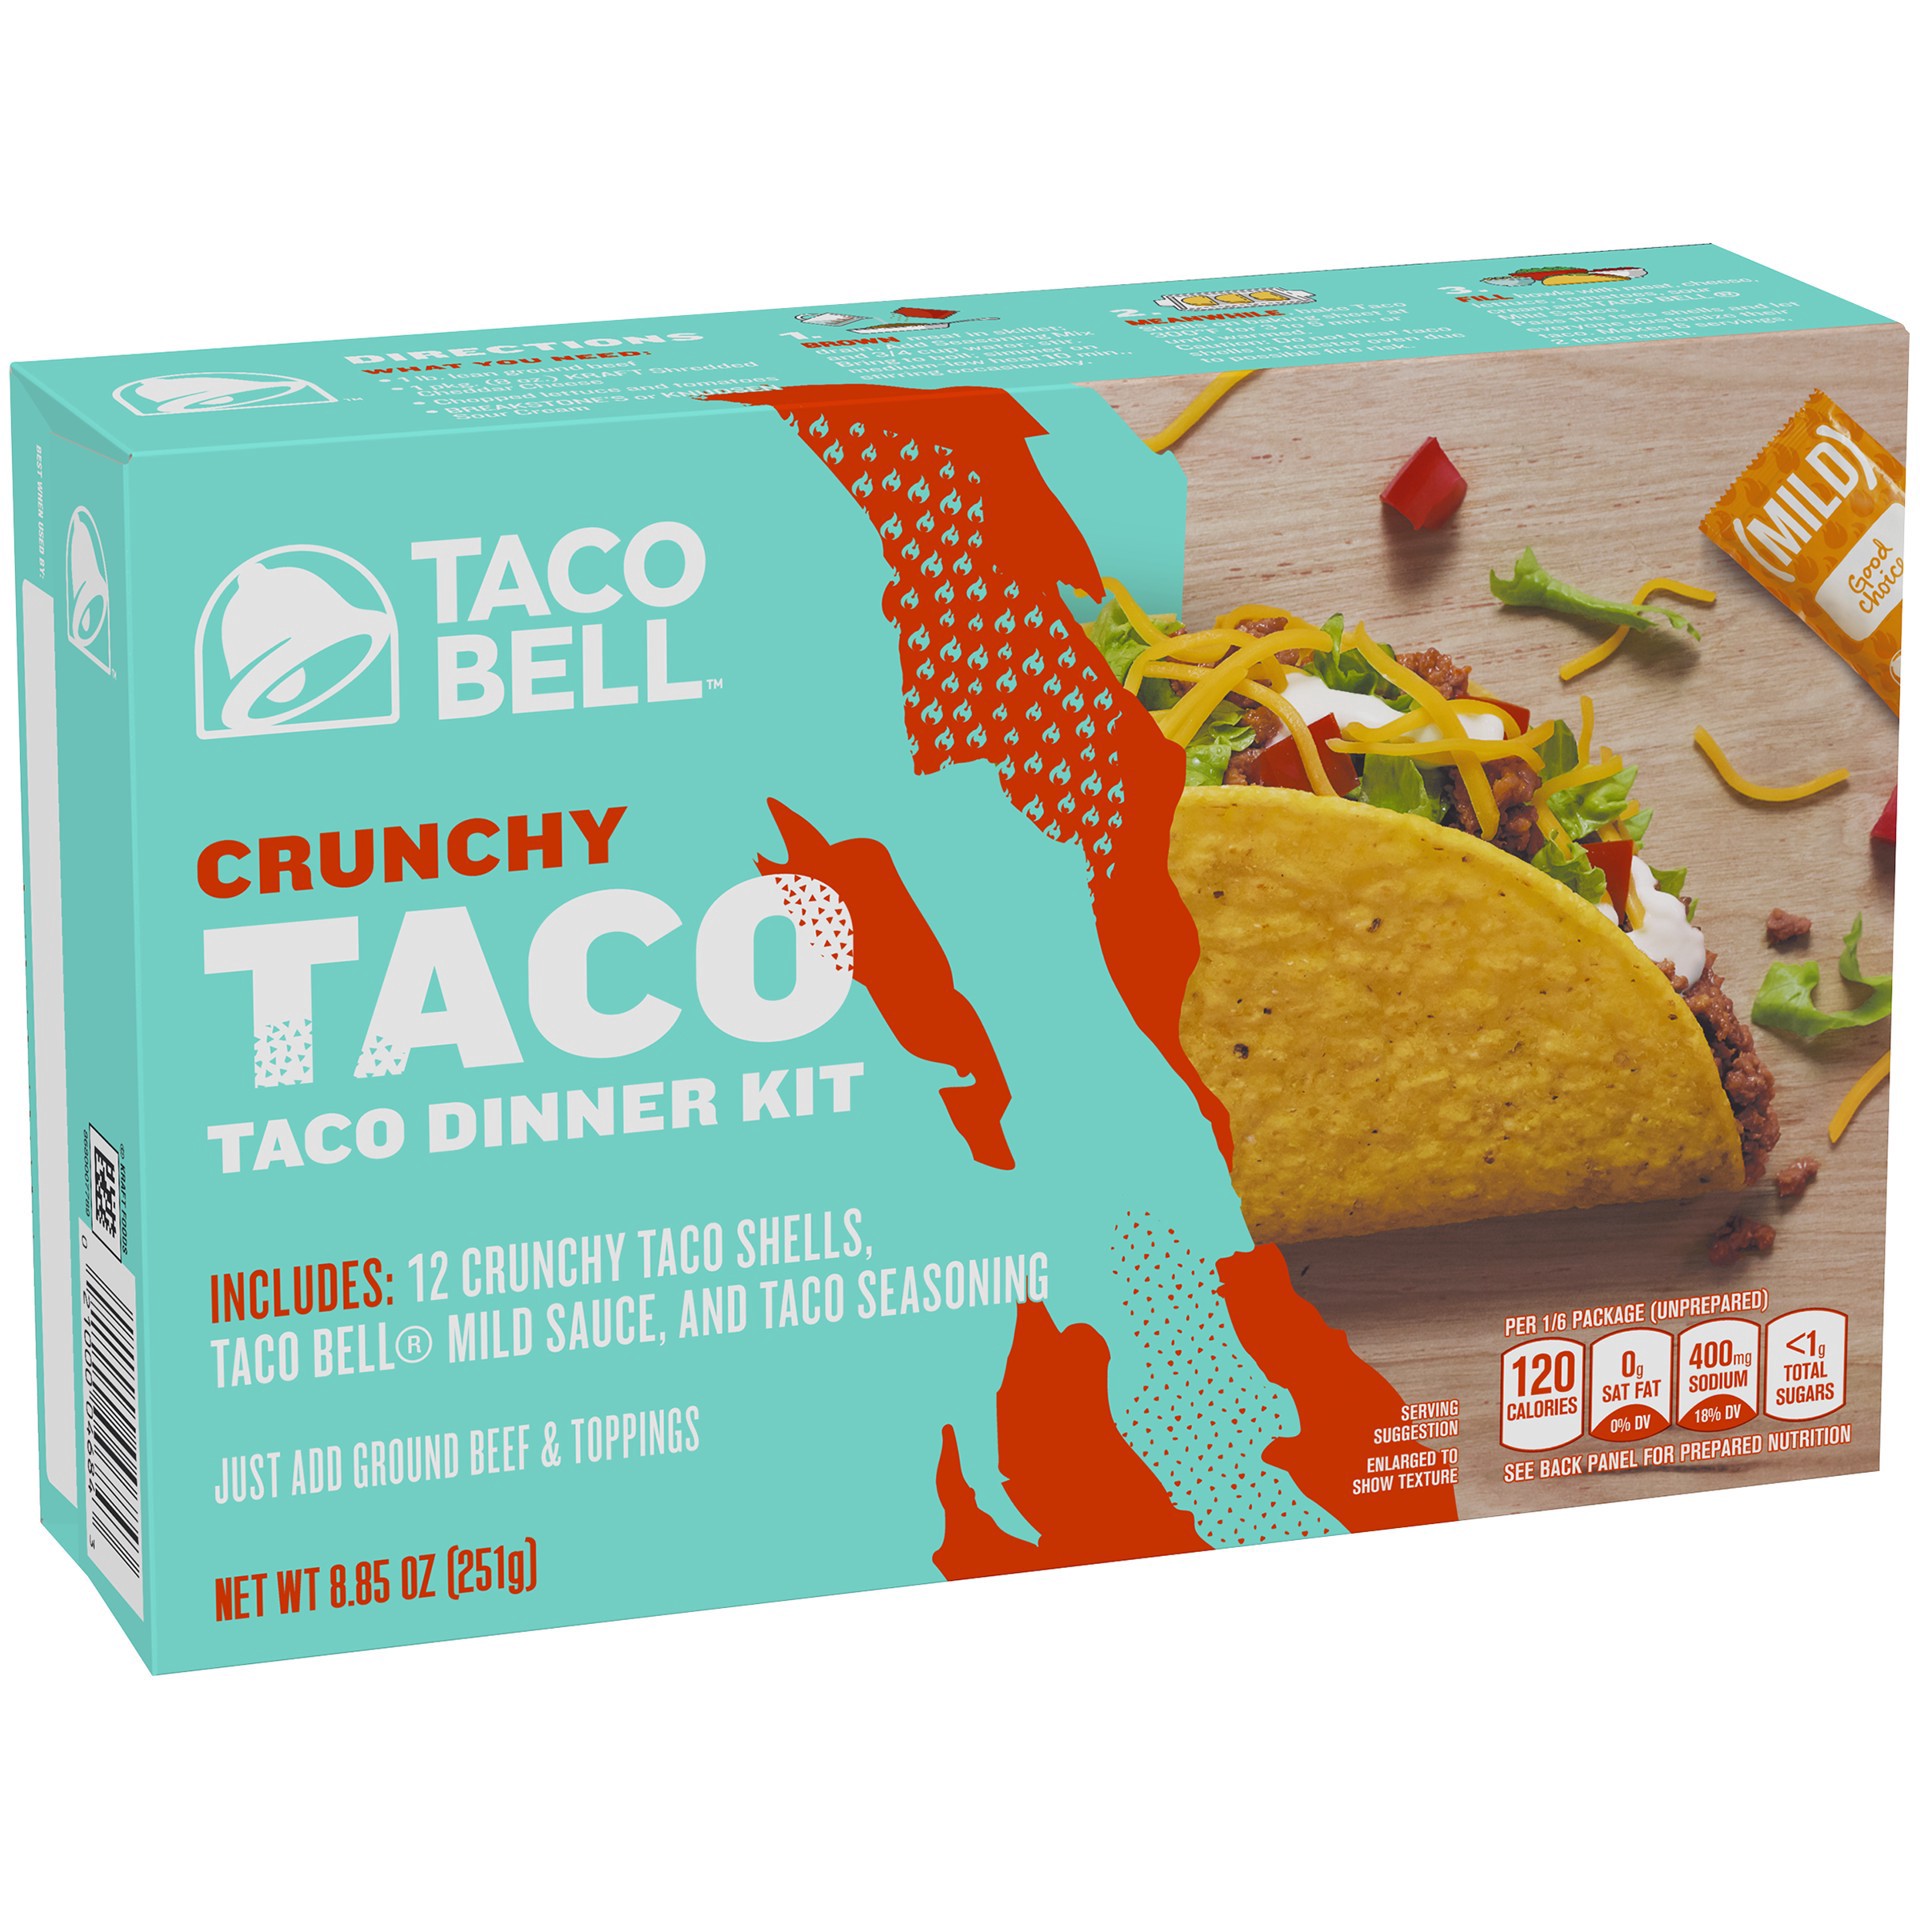 slide 25 of 91, Taco Bell Crunchy Taco Cravings Kit with 12 Crunchy Taco Shells, Taco Bell Mild Sauce & Seasoning, 8.85 oz Box, 1 ct